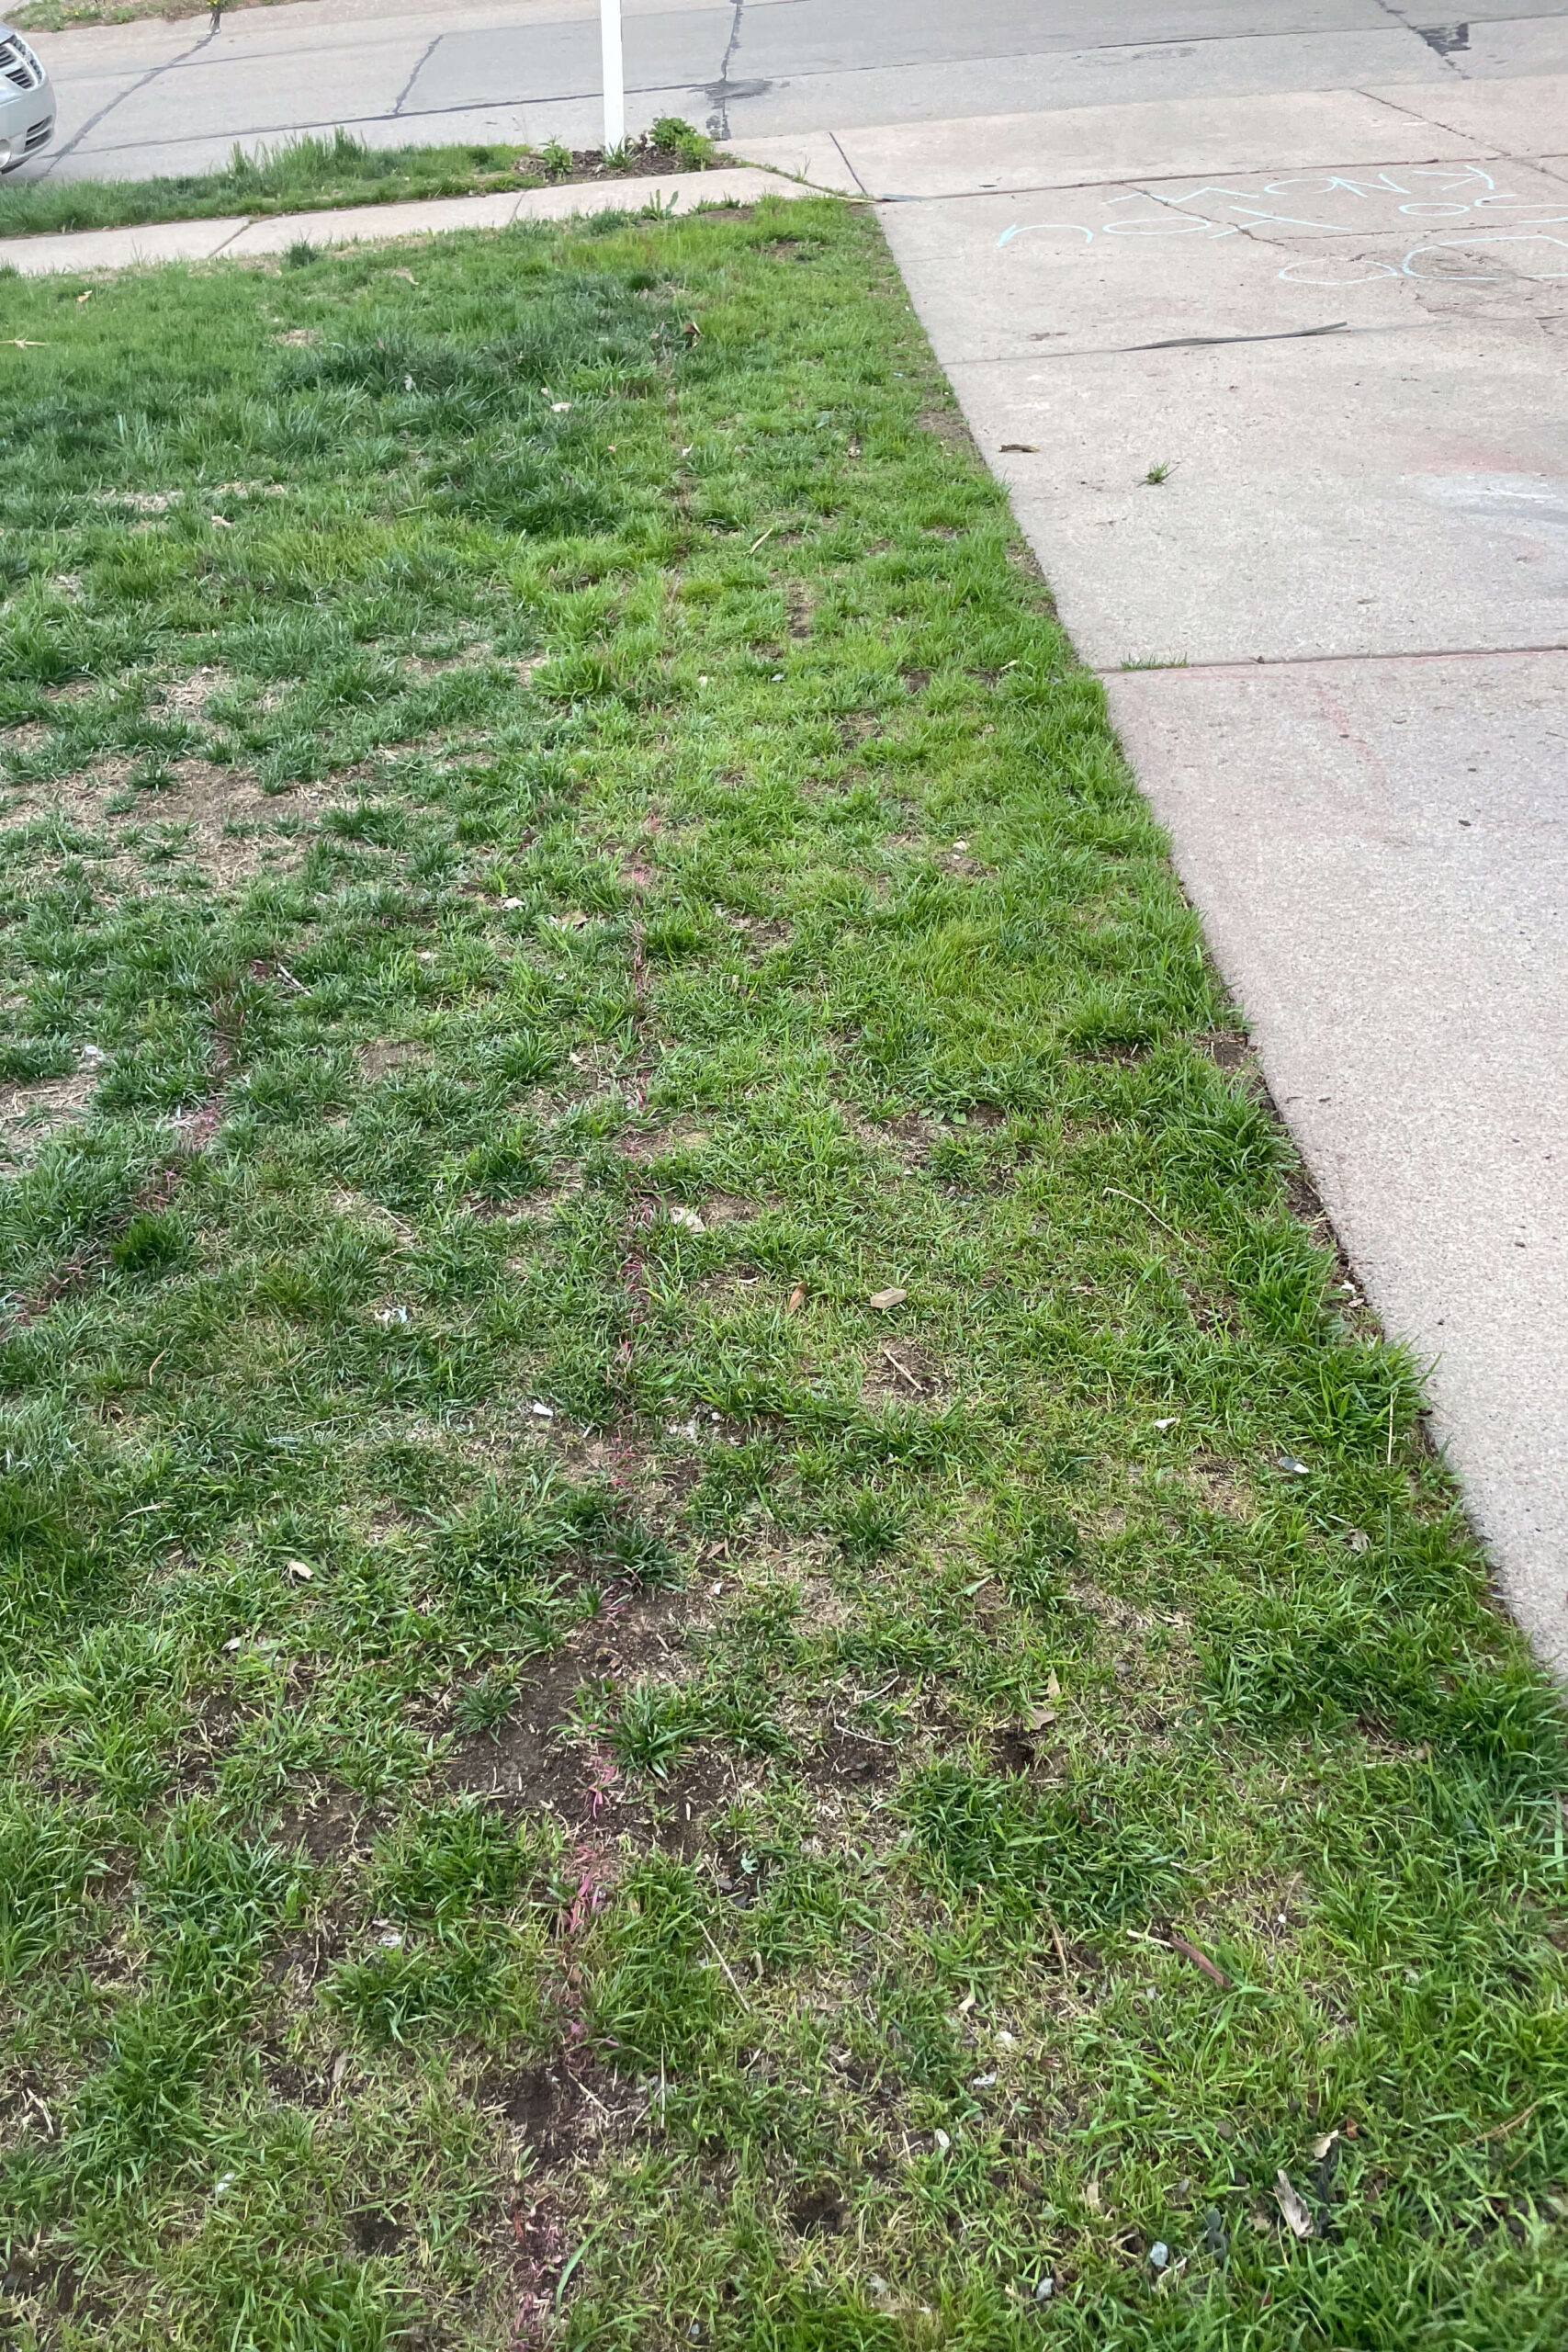 Grass next to driveway.